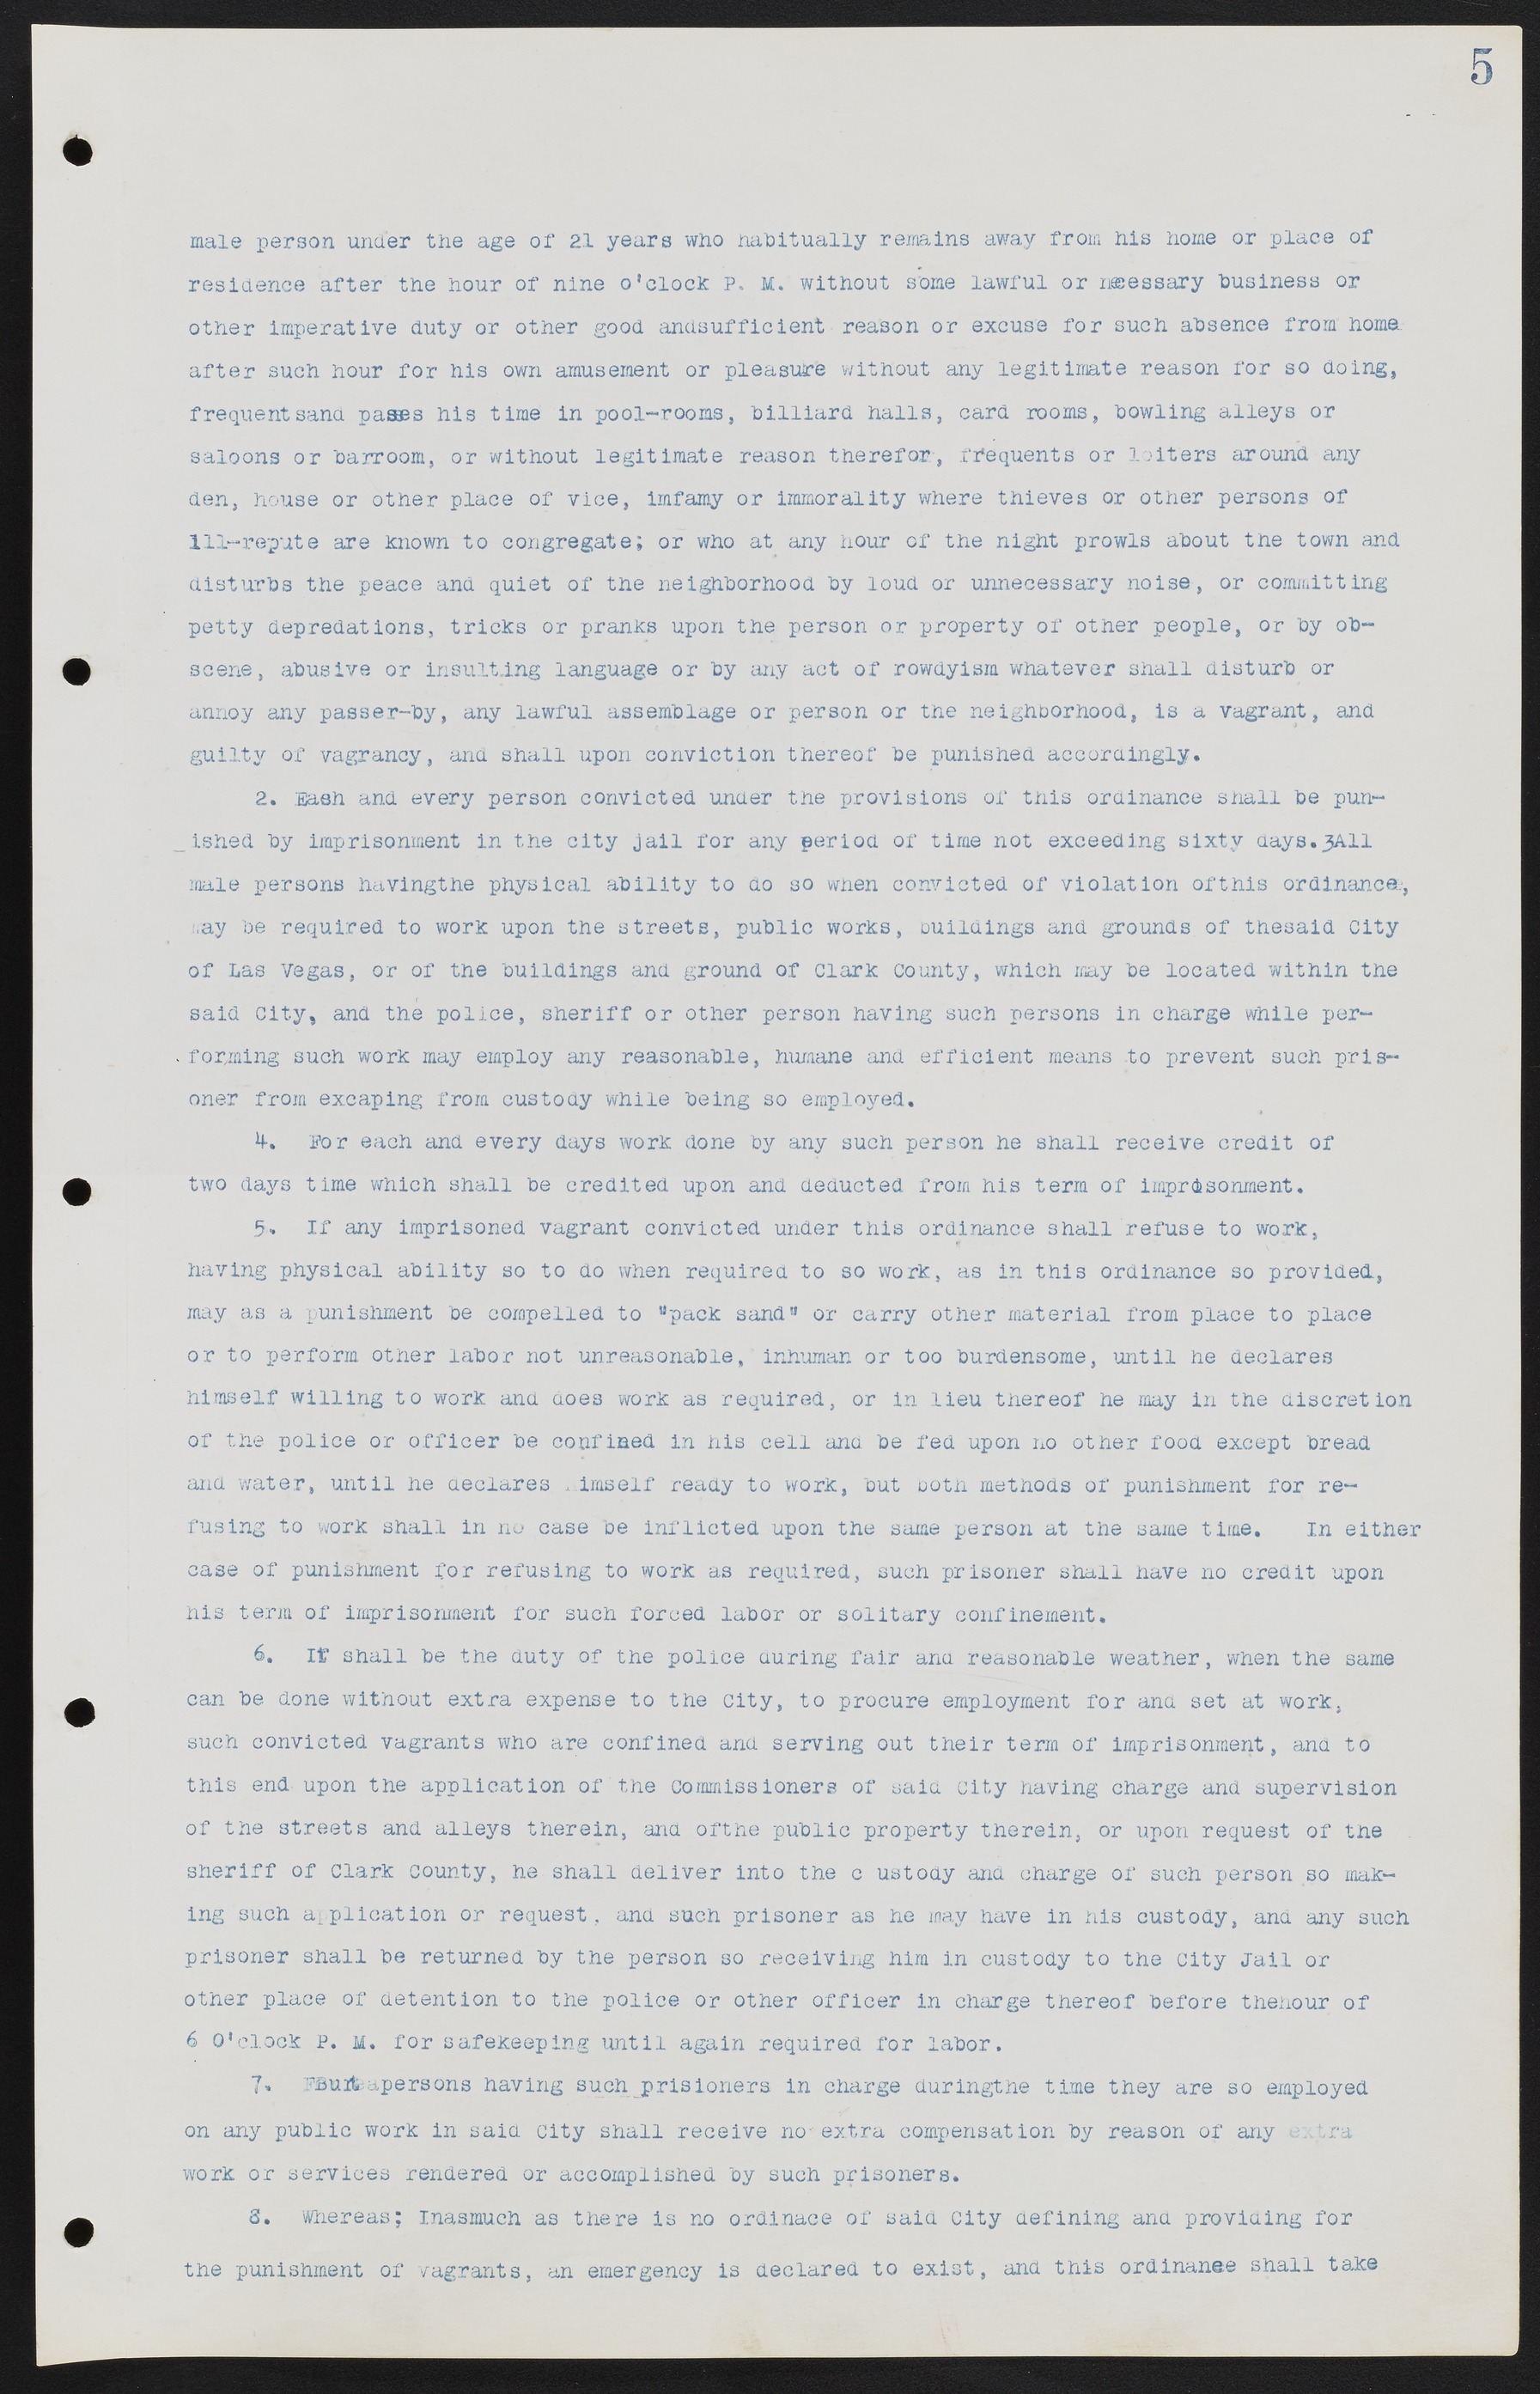 Las Vegas City Commission Minutes, June 22, 1911 to February 7, 1922, lvc000001-19